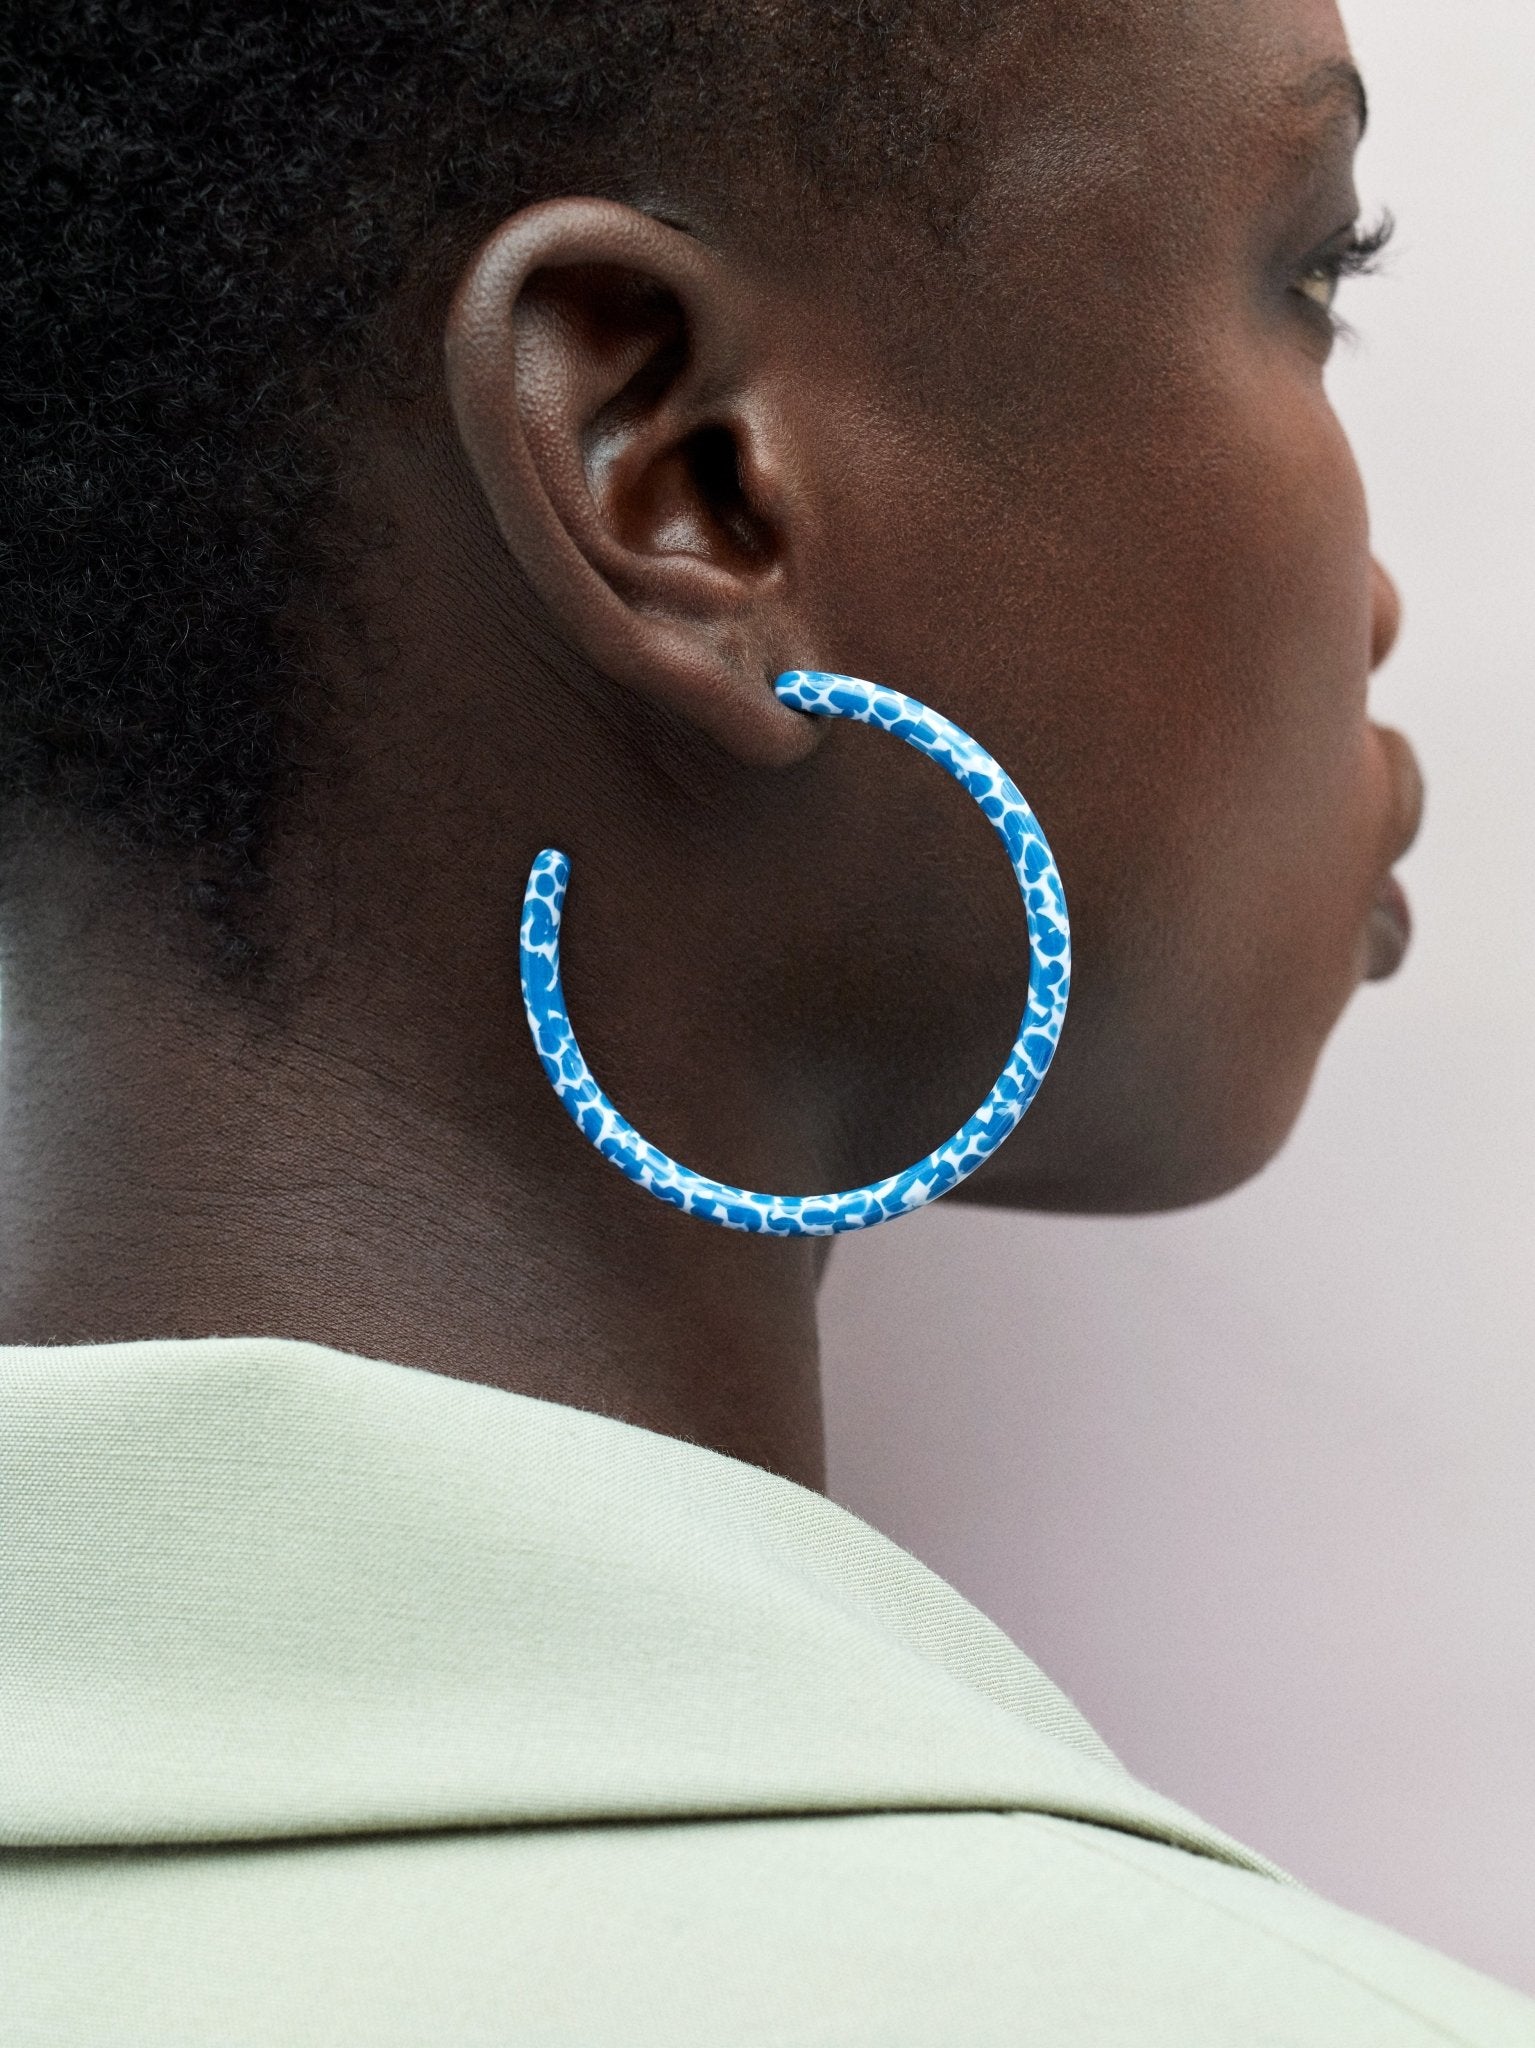 12 Pairs of Neon Earrings Water Drop Dangle Earrings with Geometric Shape  Earrings Studs Exaggerated Ear Drops - Walmart.com